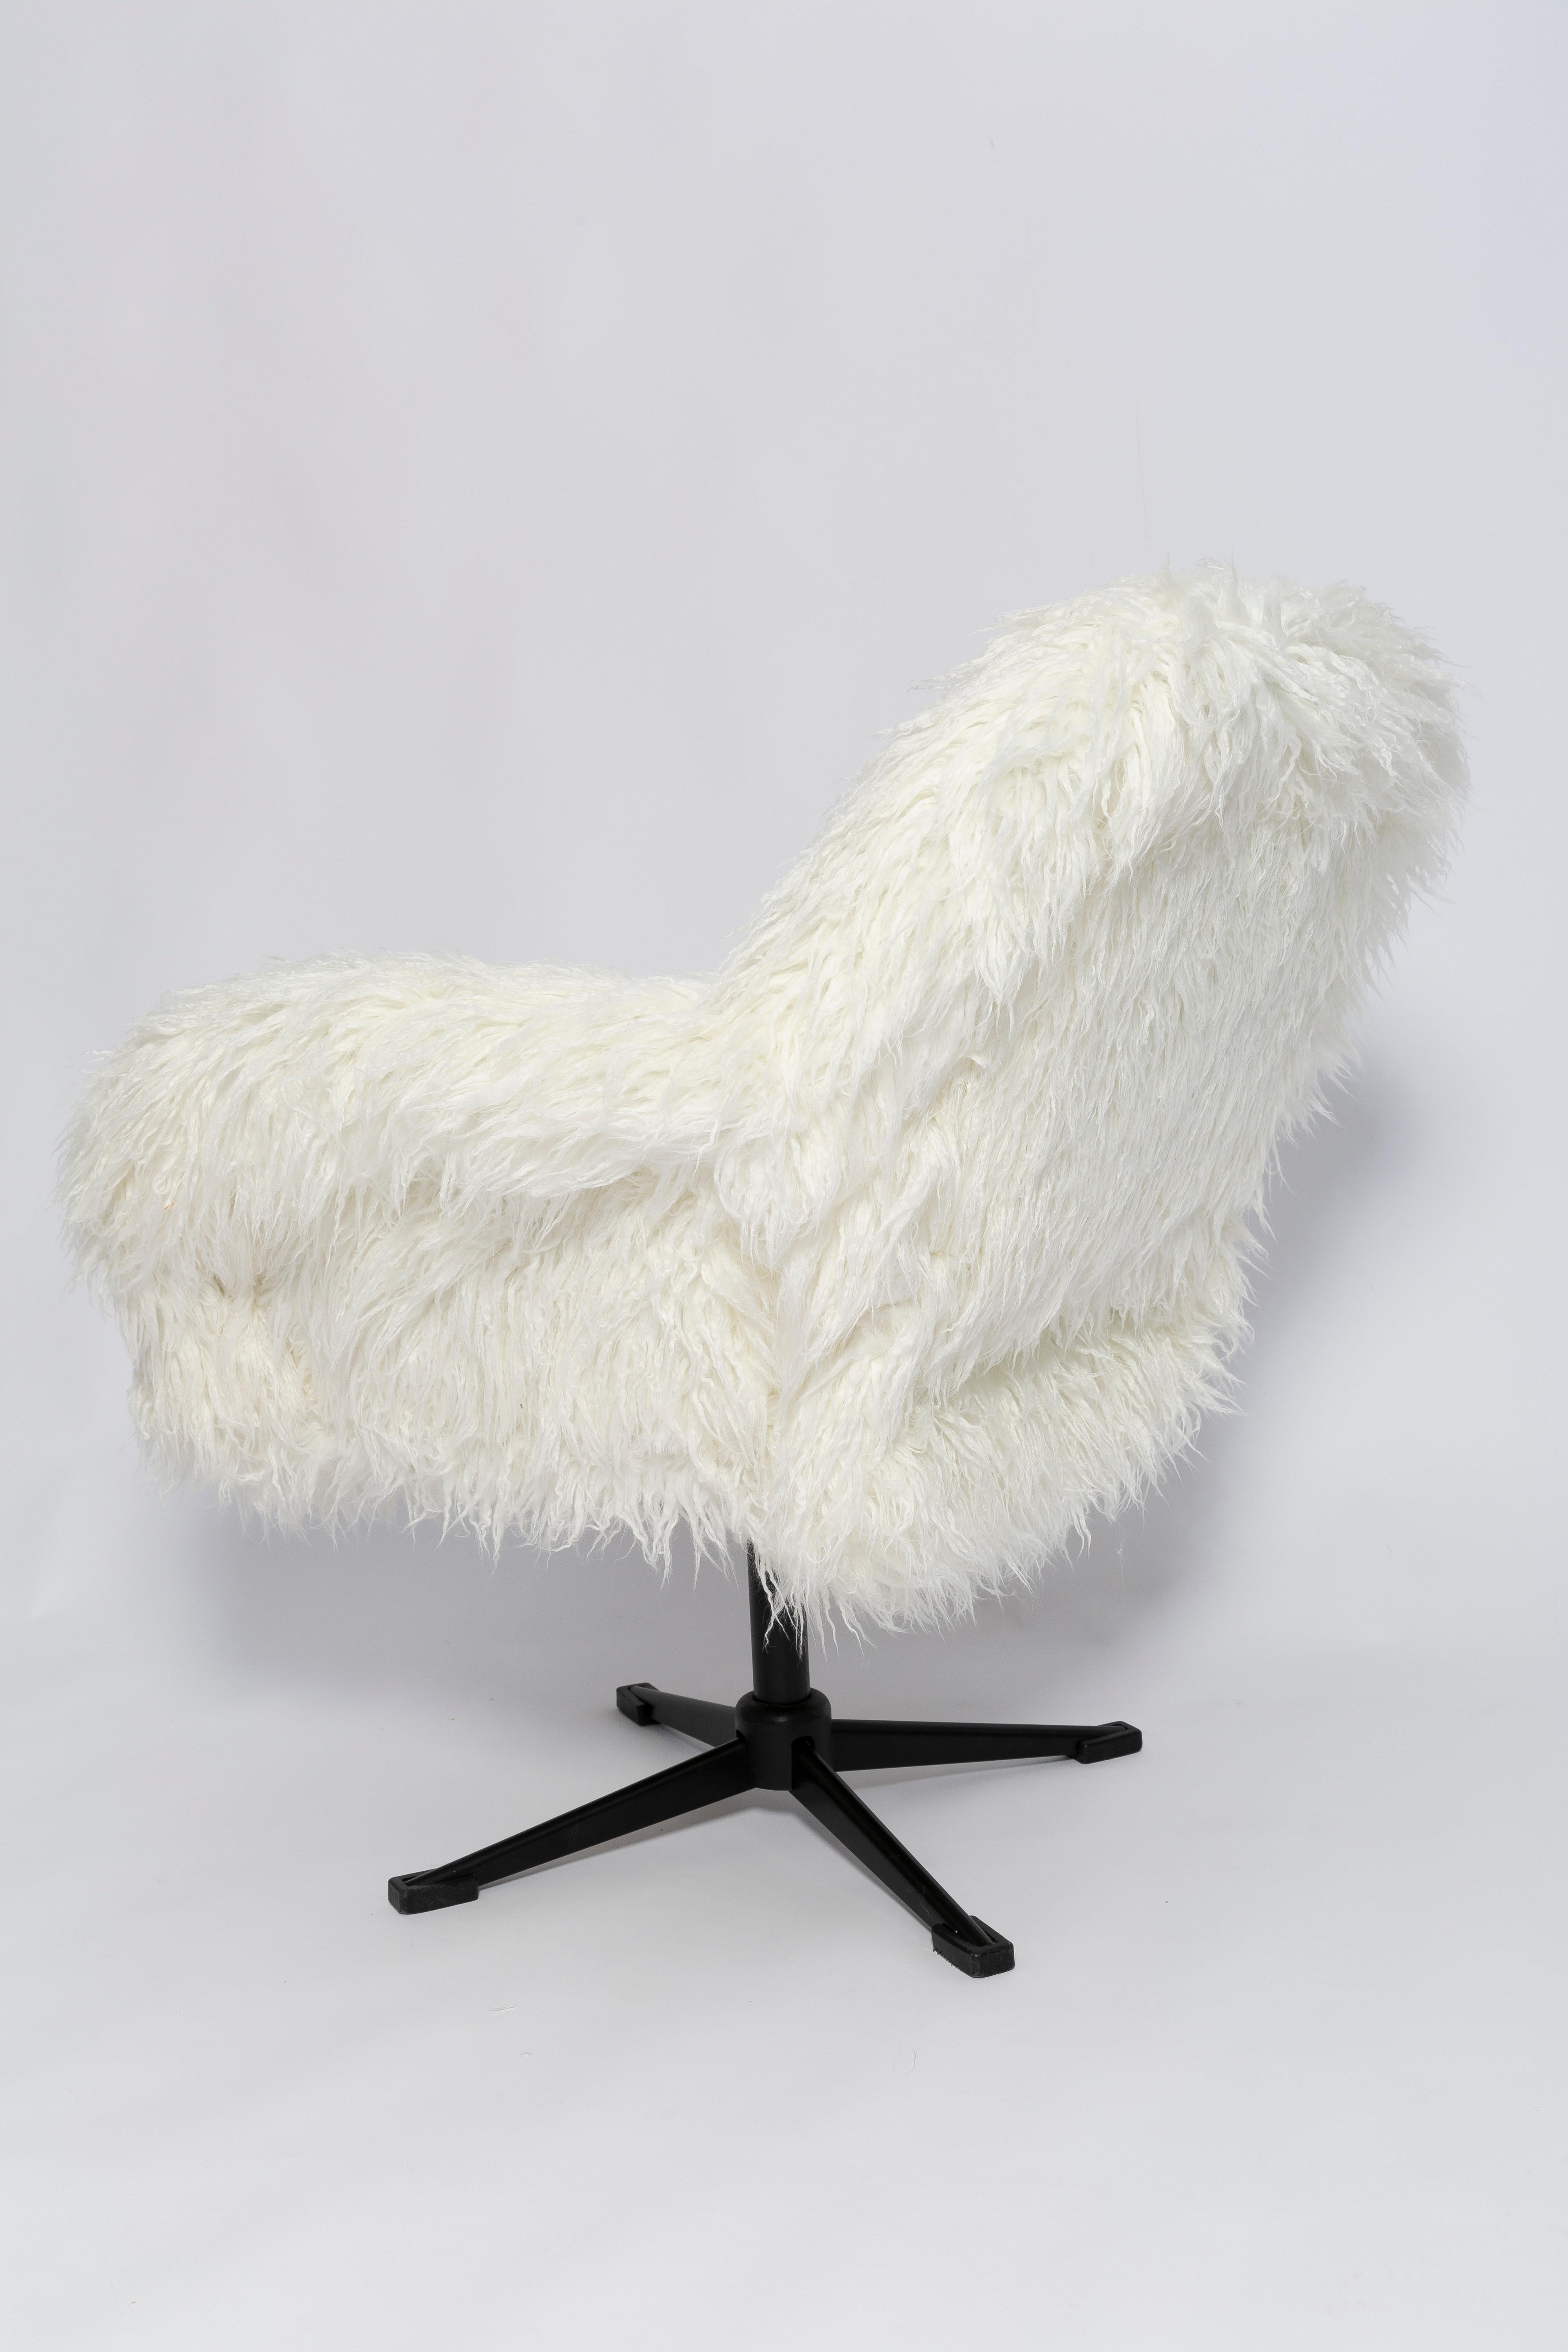 Metalwork Mid-Century Vintage White Alpaca Faux Fur Swivel Armchair, Europe, 1960s For Sale